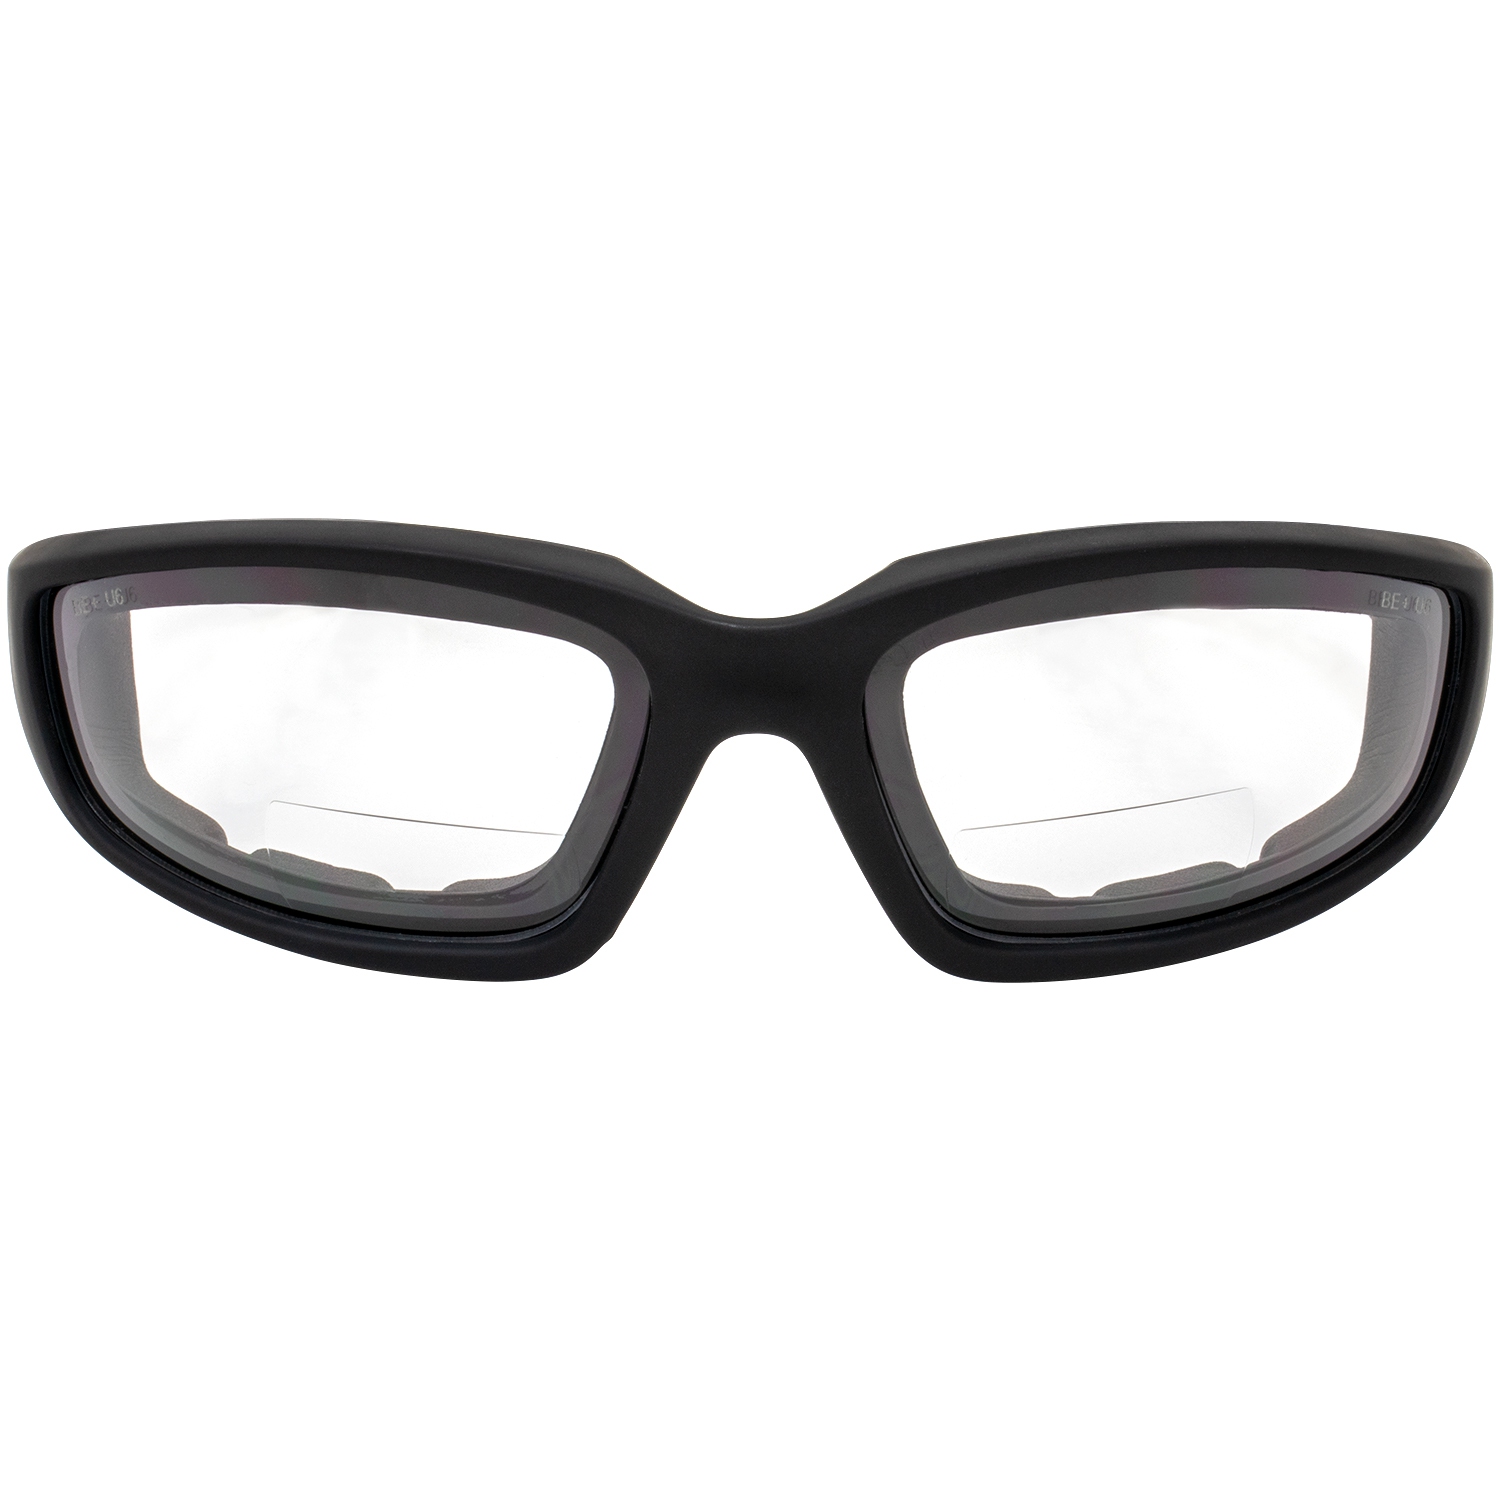 Birdz Eyewear Oriole Padded Motorcycle Glasses (Black Frame/Clear Lens)